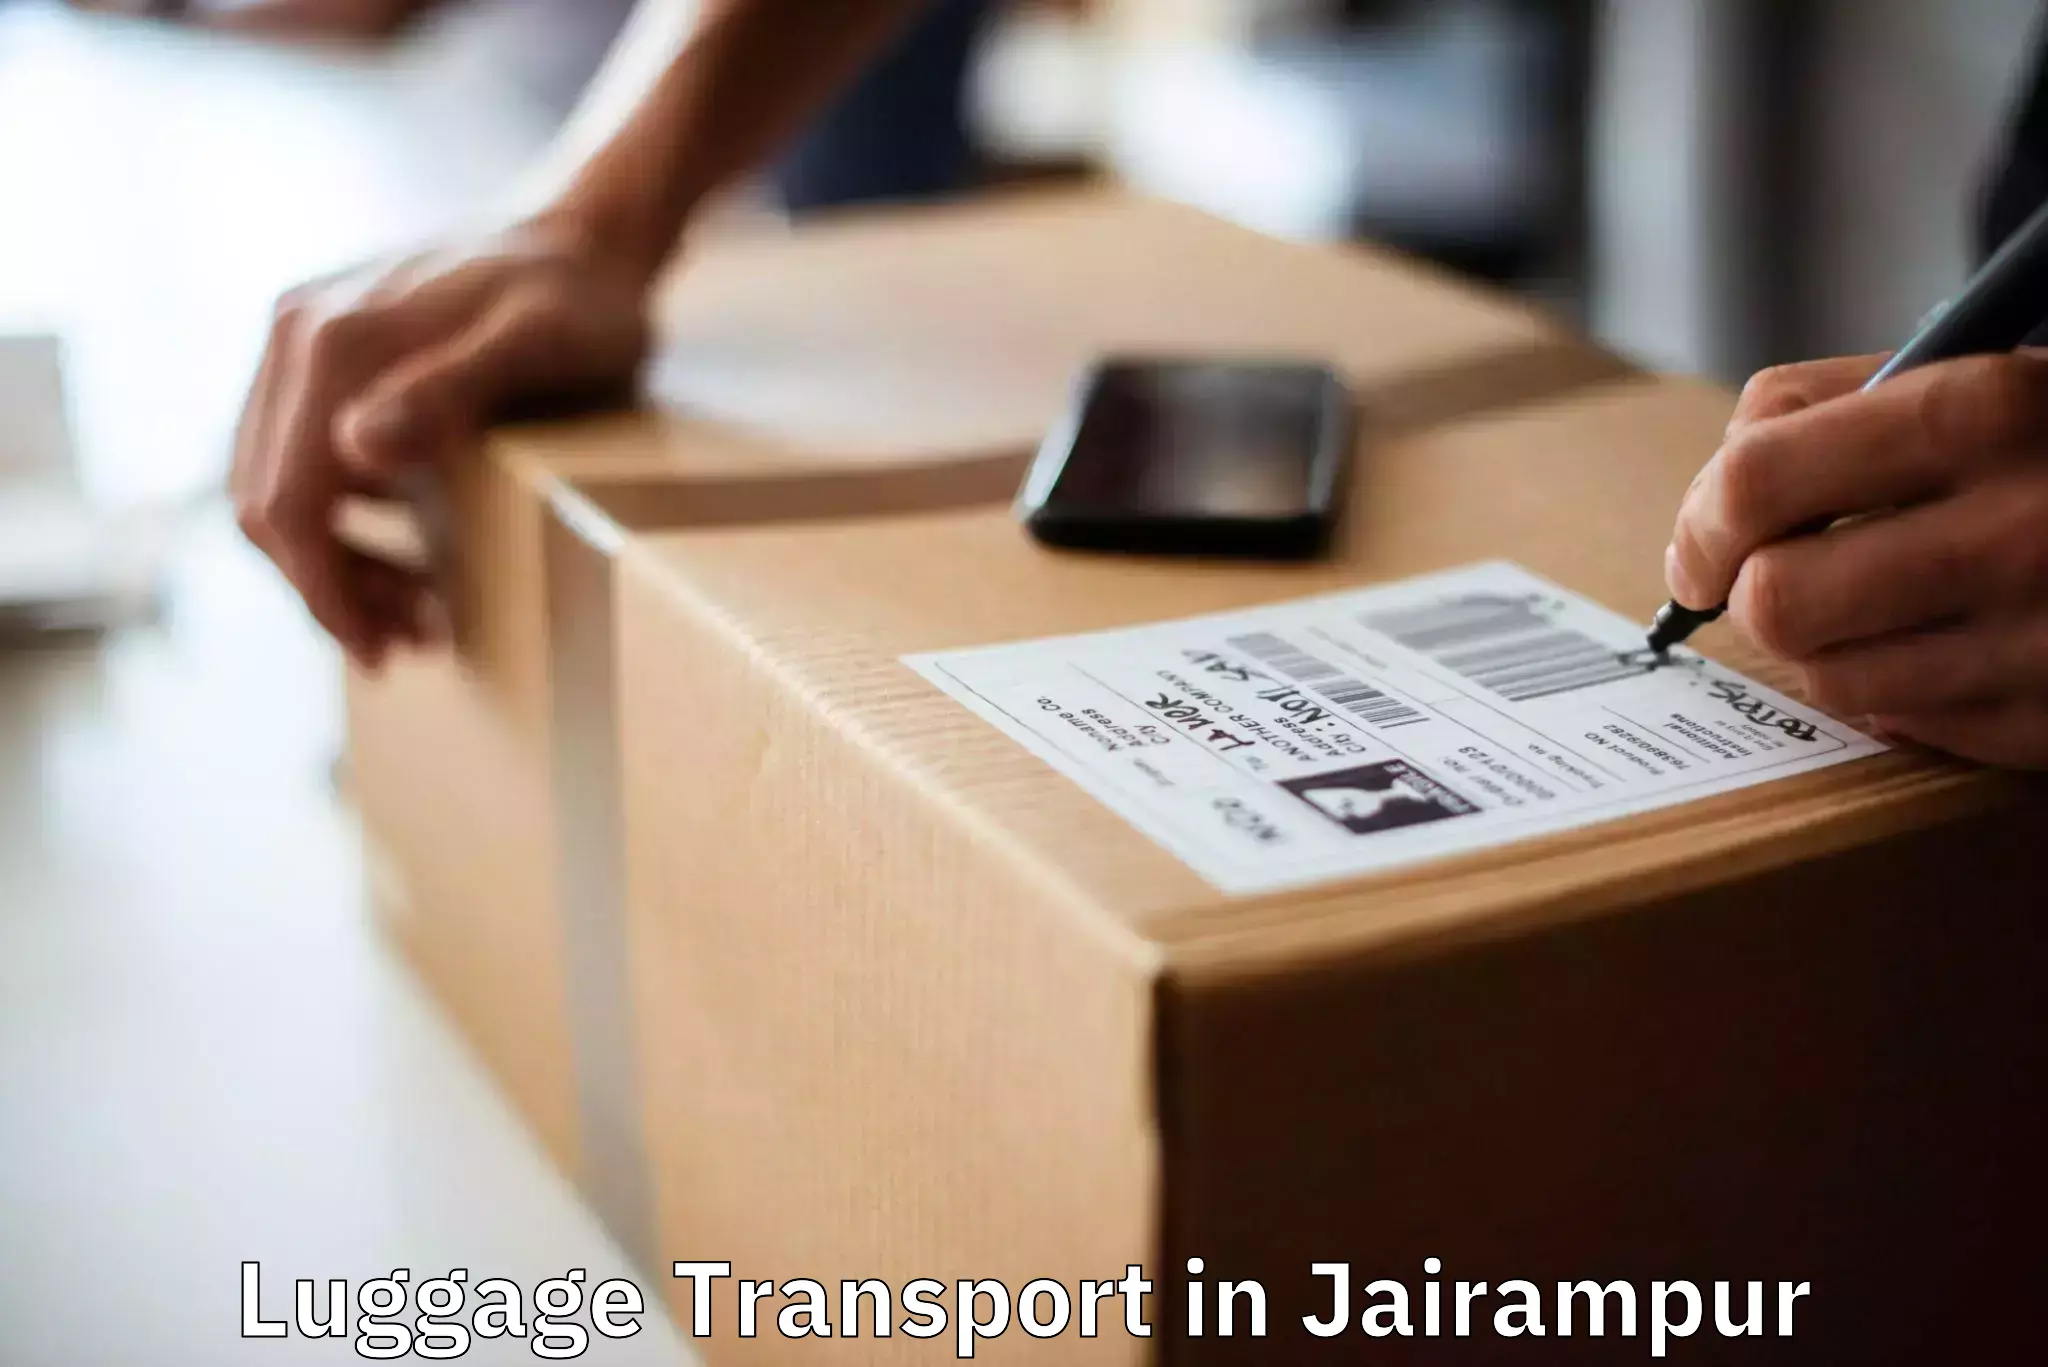 Tailored baggage transport in Jairampur